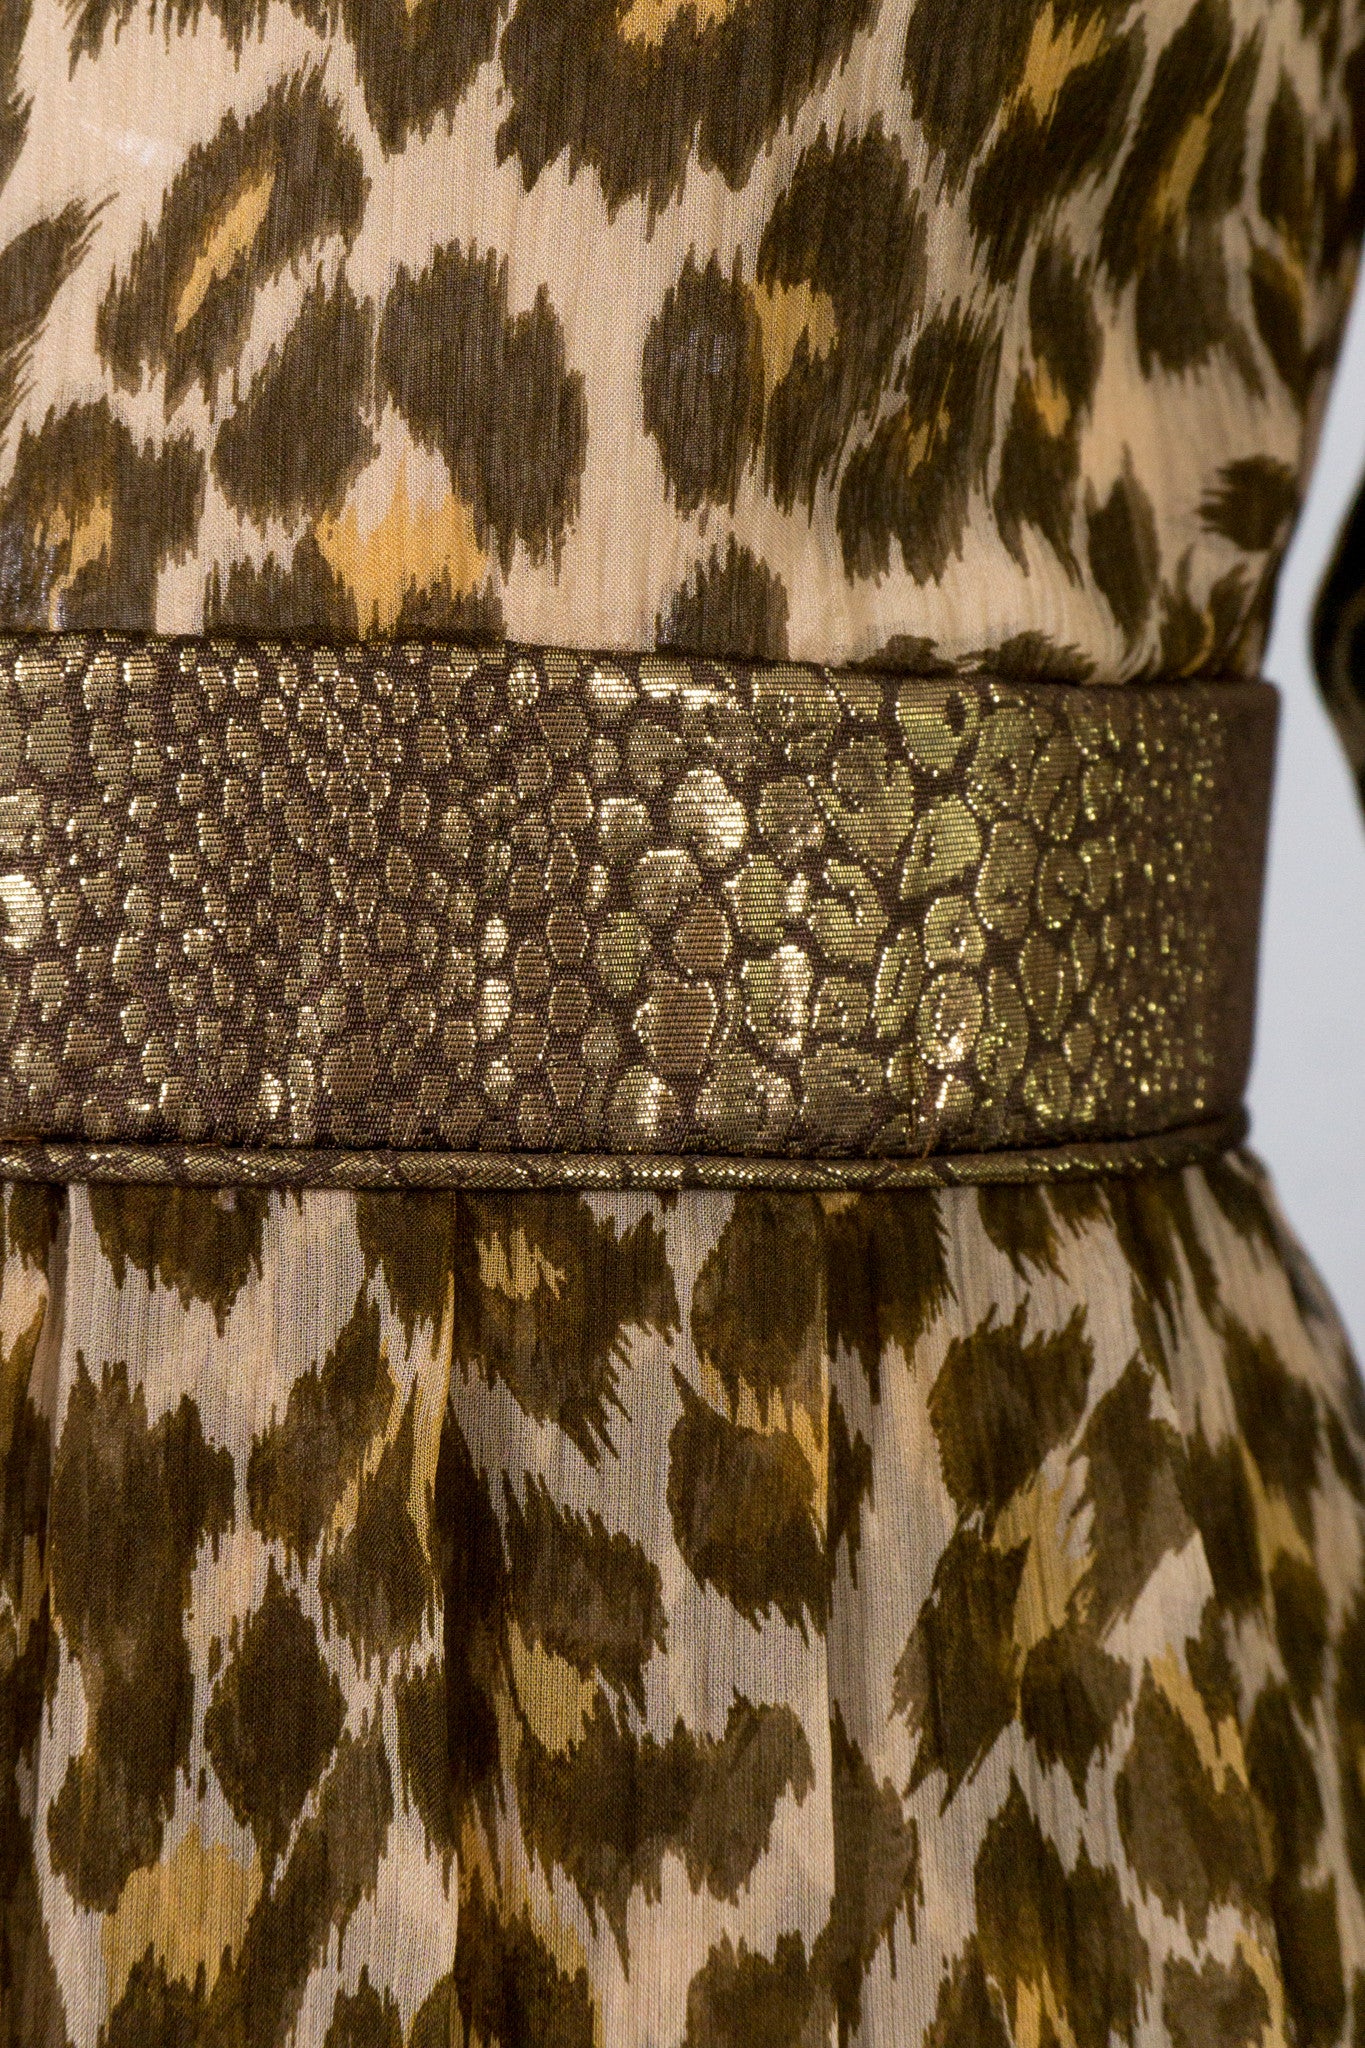 Galanos Asymmetrical Silk Chiffon Leopard Print Dress